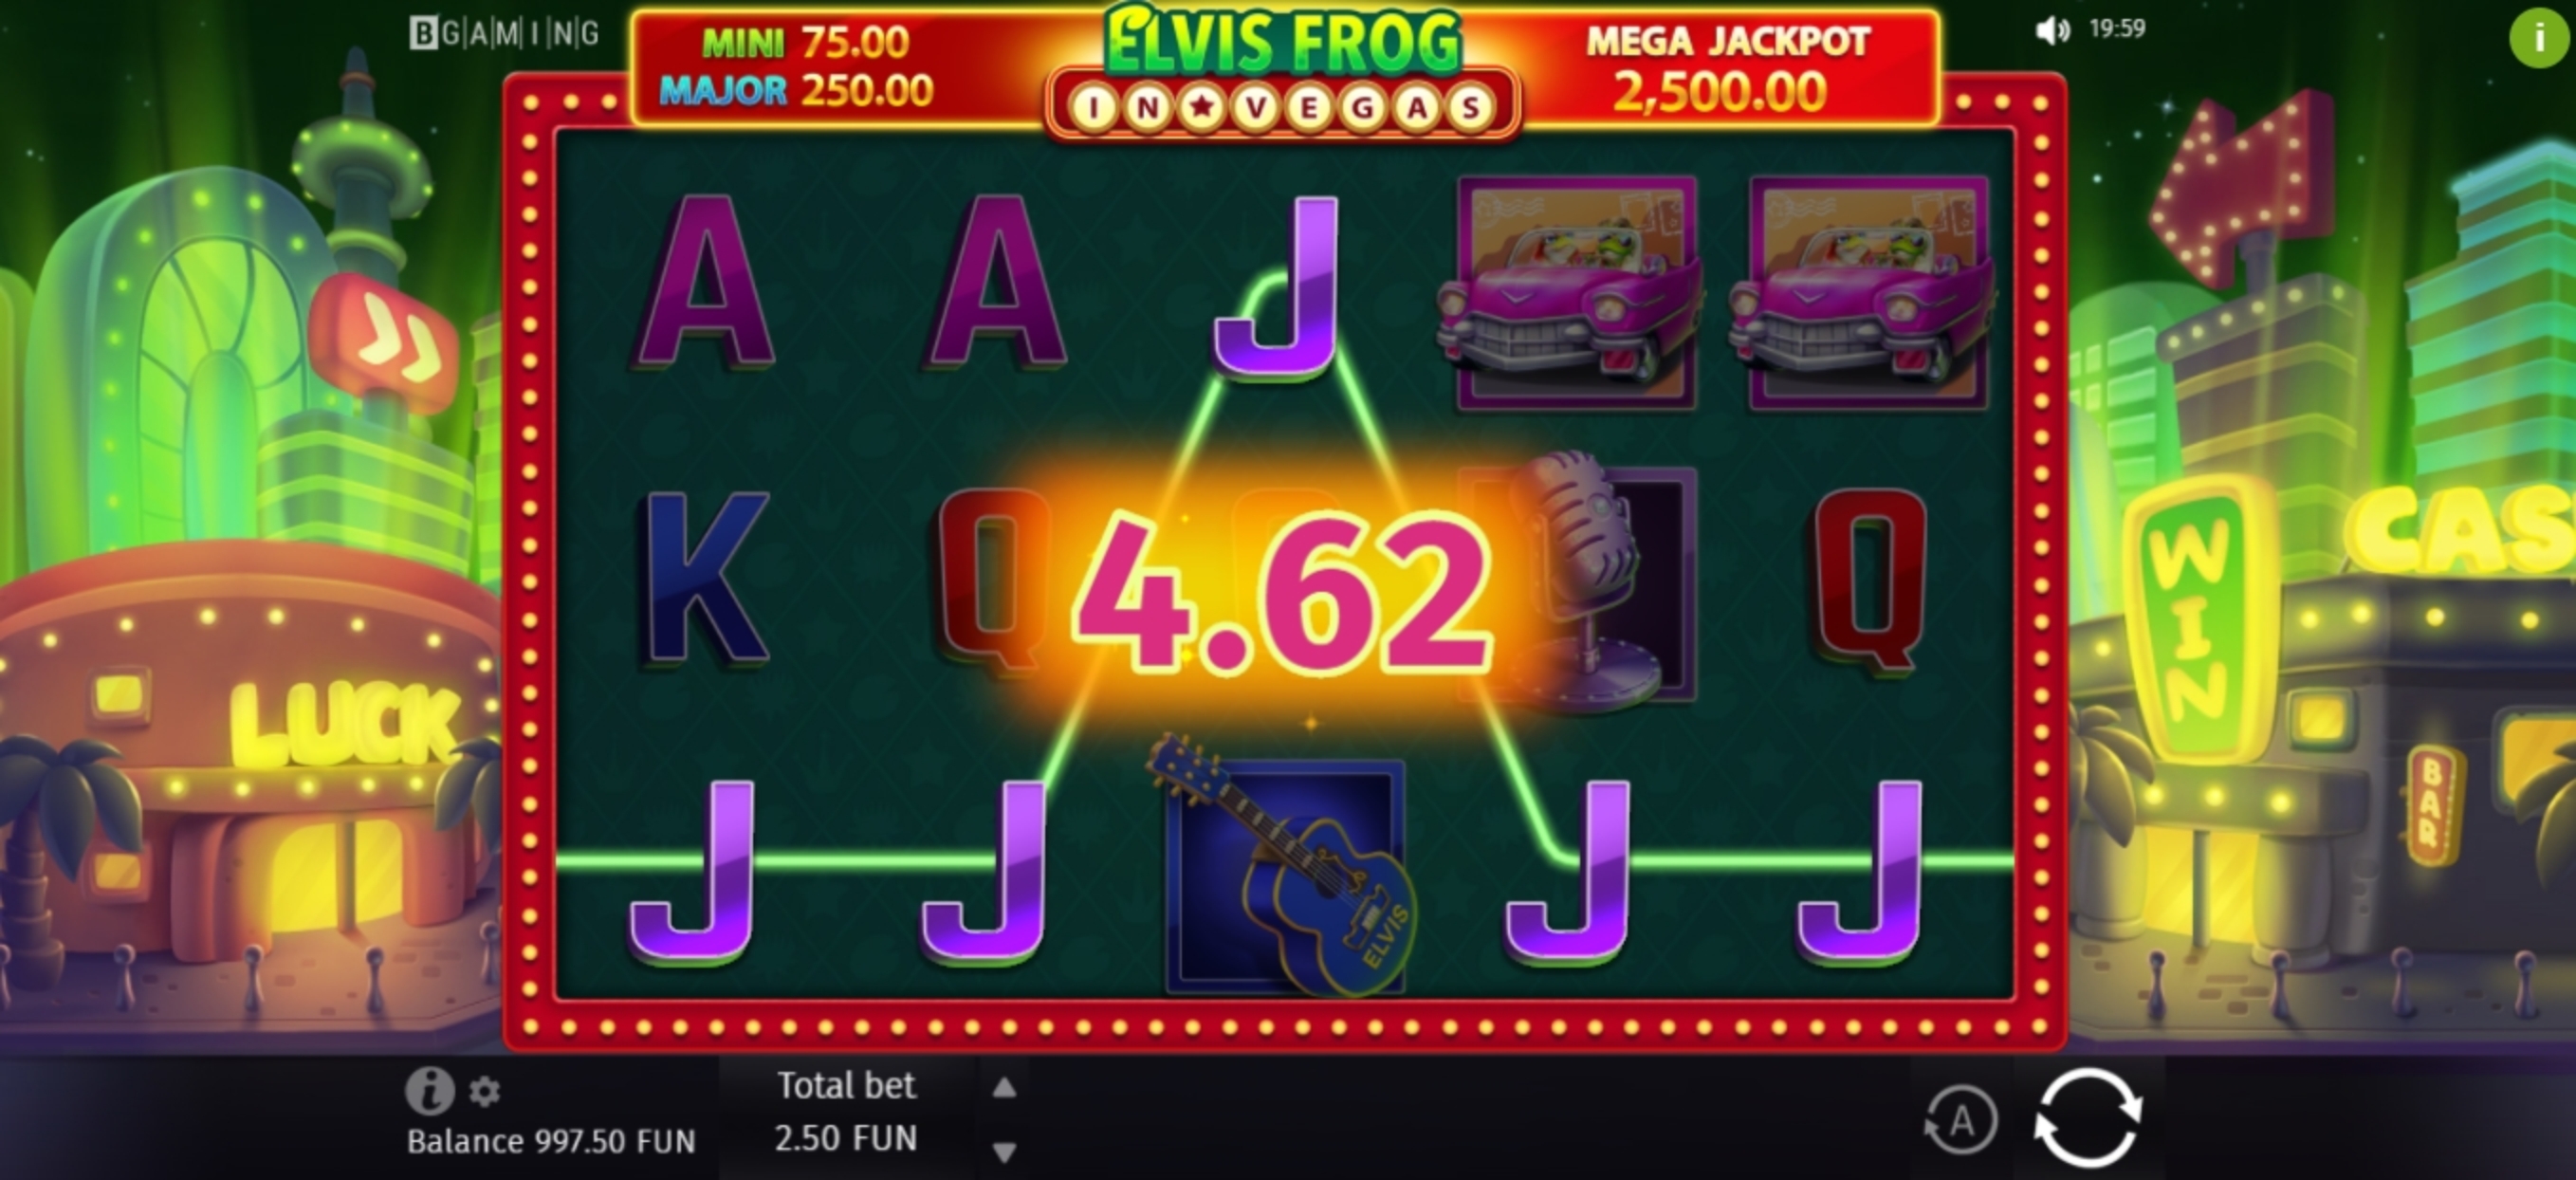 Win Money in Elvis Frog in Vegas Free Slot Game by BGAMING